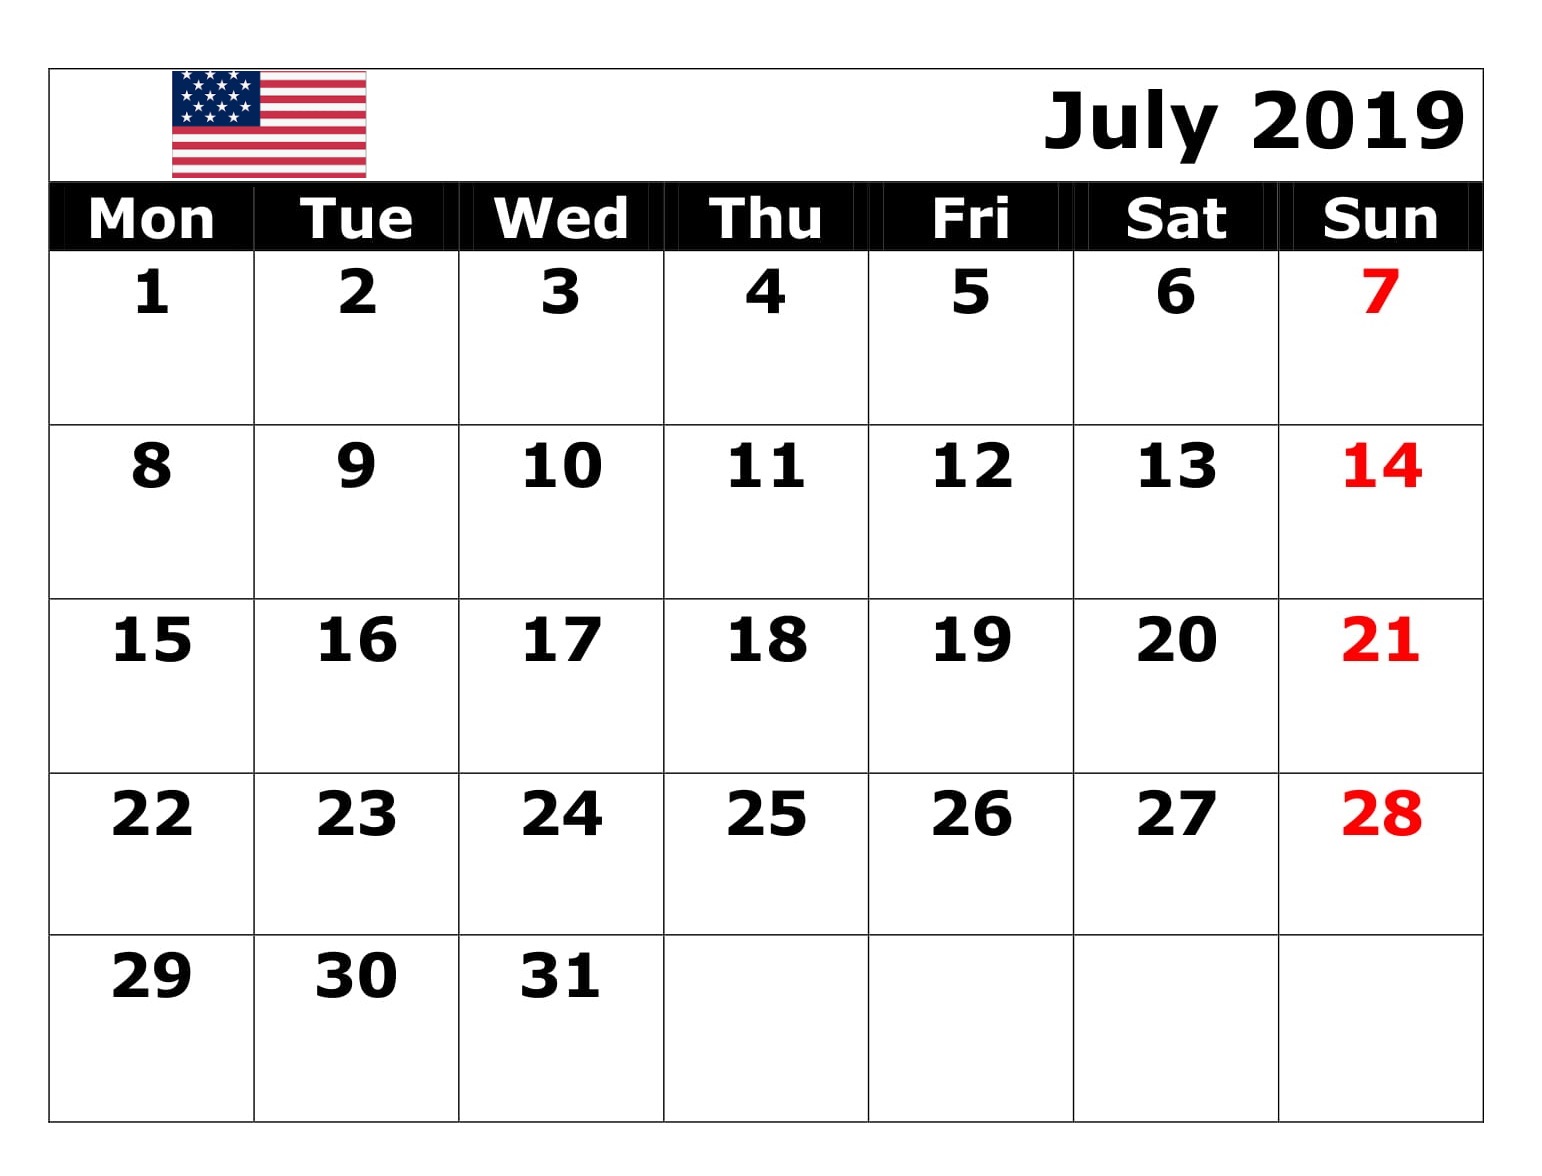 July 2019 USA Bank Holidays Calendar